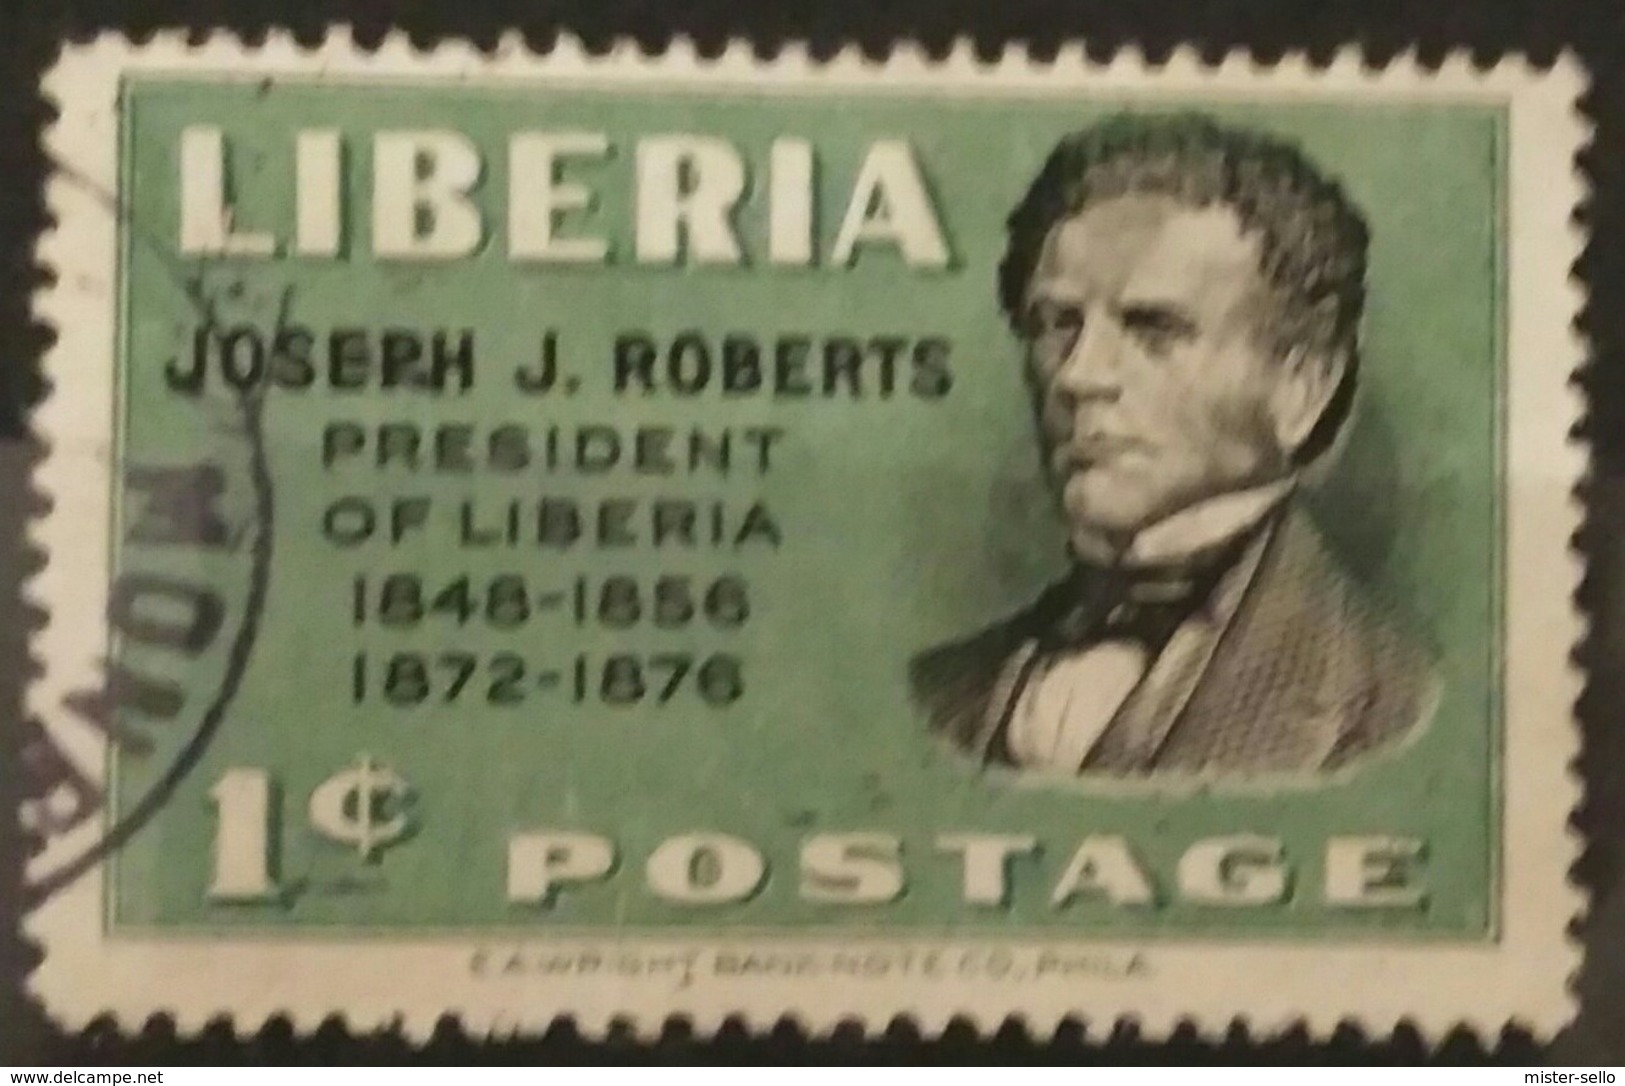 LIBERIA 1948 Liberian Presidents - Joseph J. Roberts, 1809-1876. USADO - USED. - Liberia